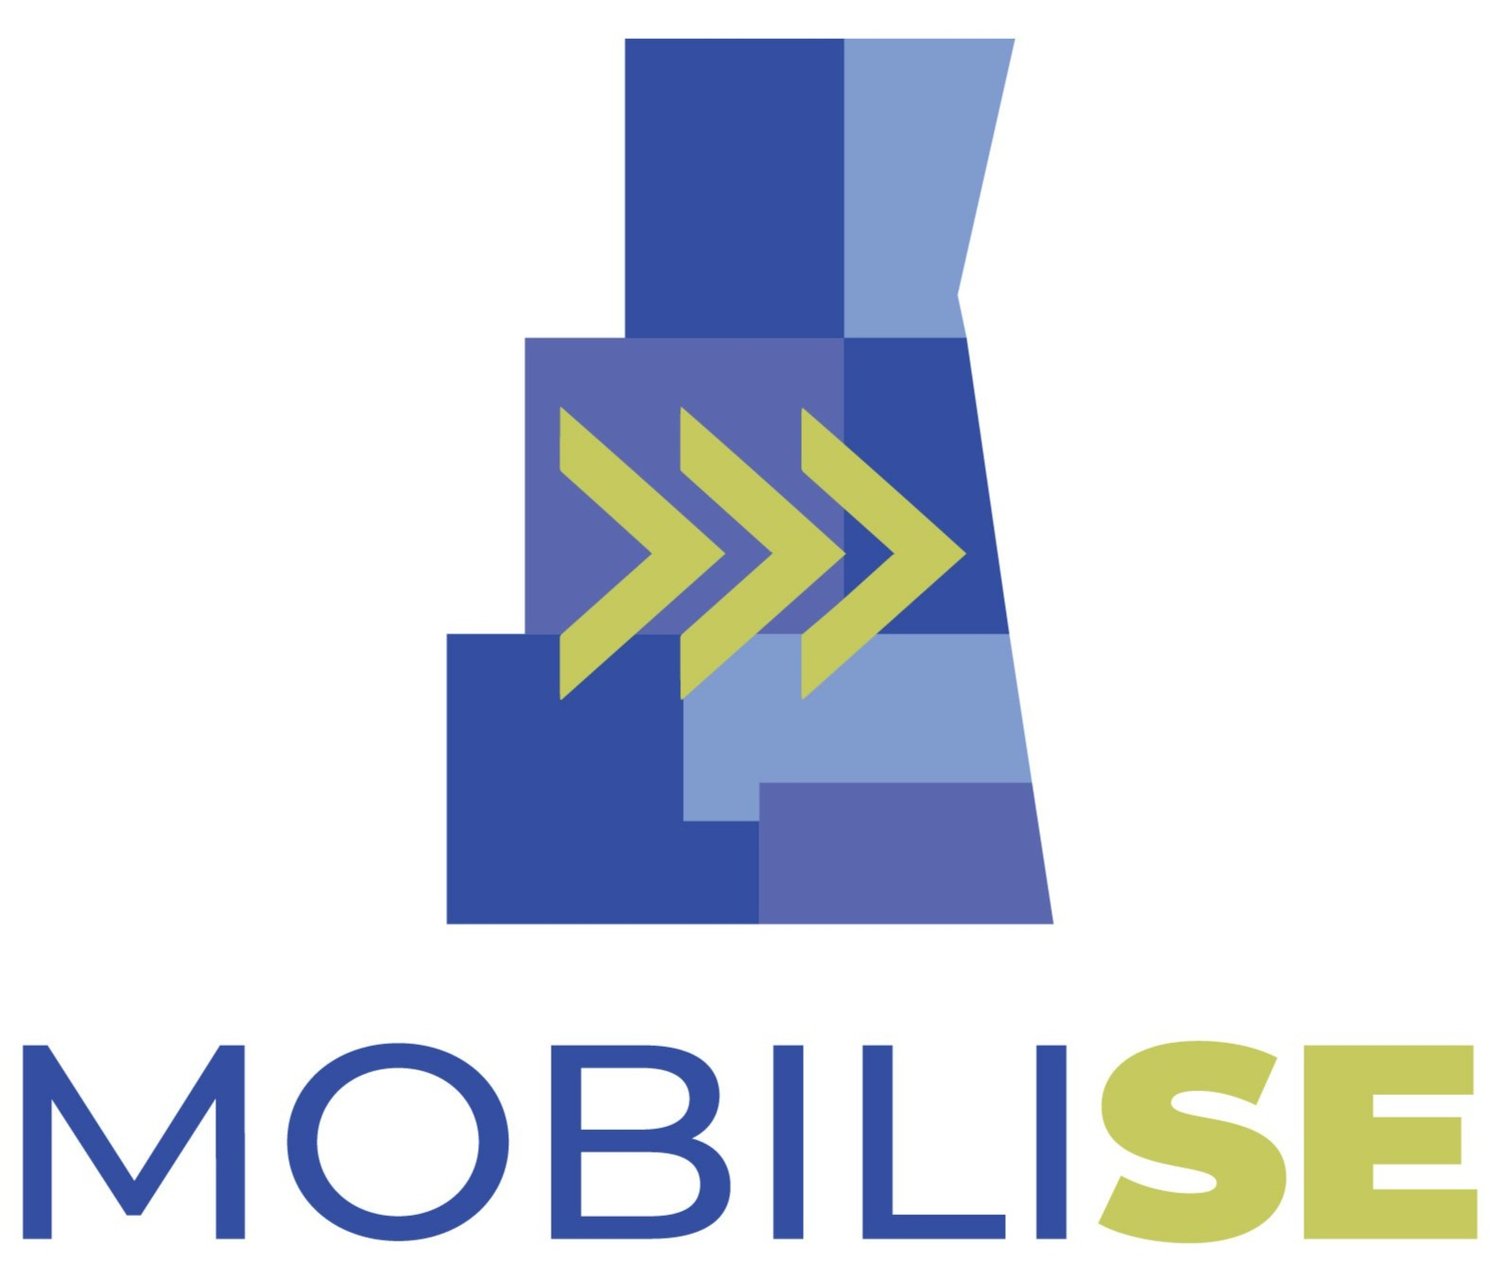 MobiliSE: Moving Transportation Forward in SE Wisconsin